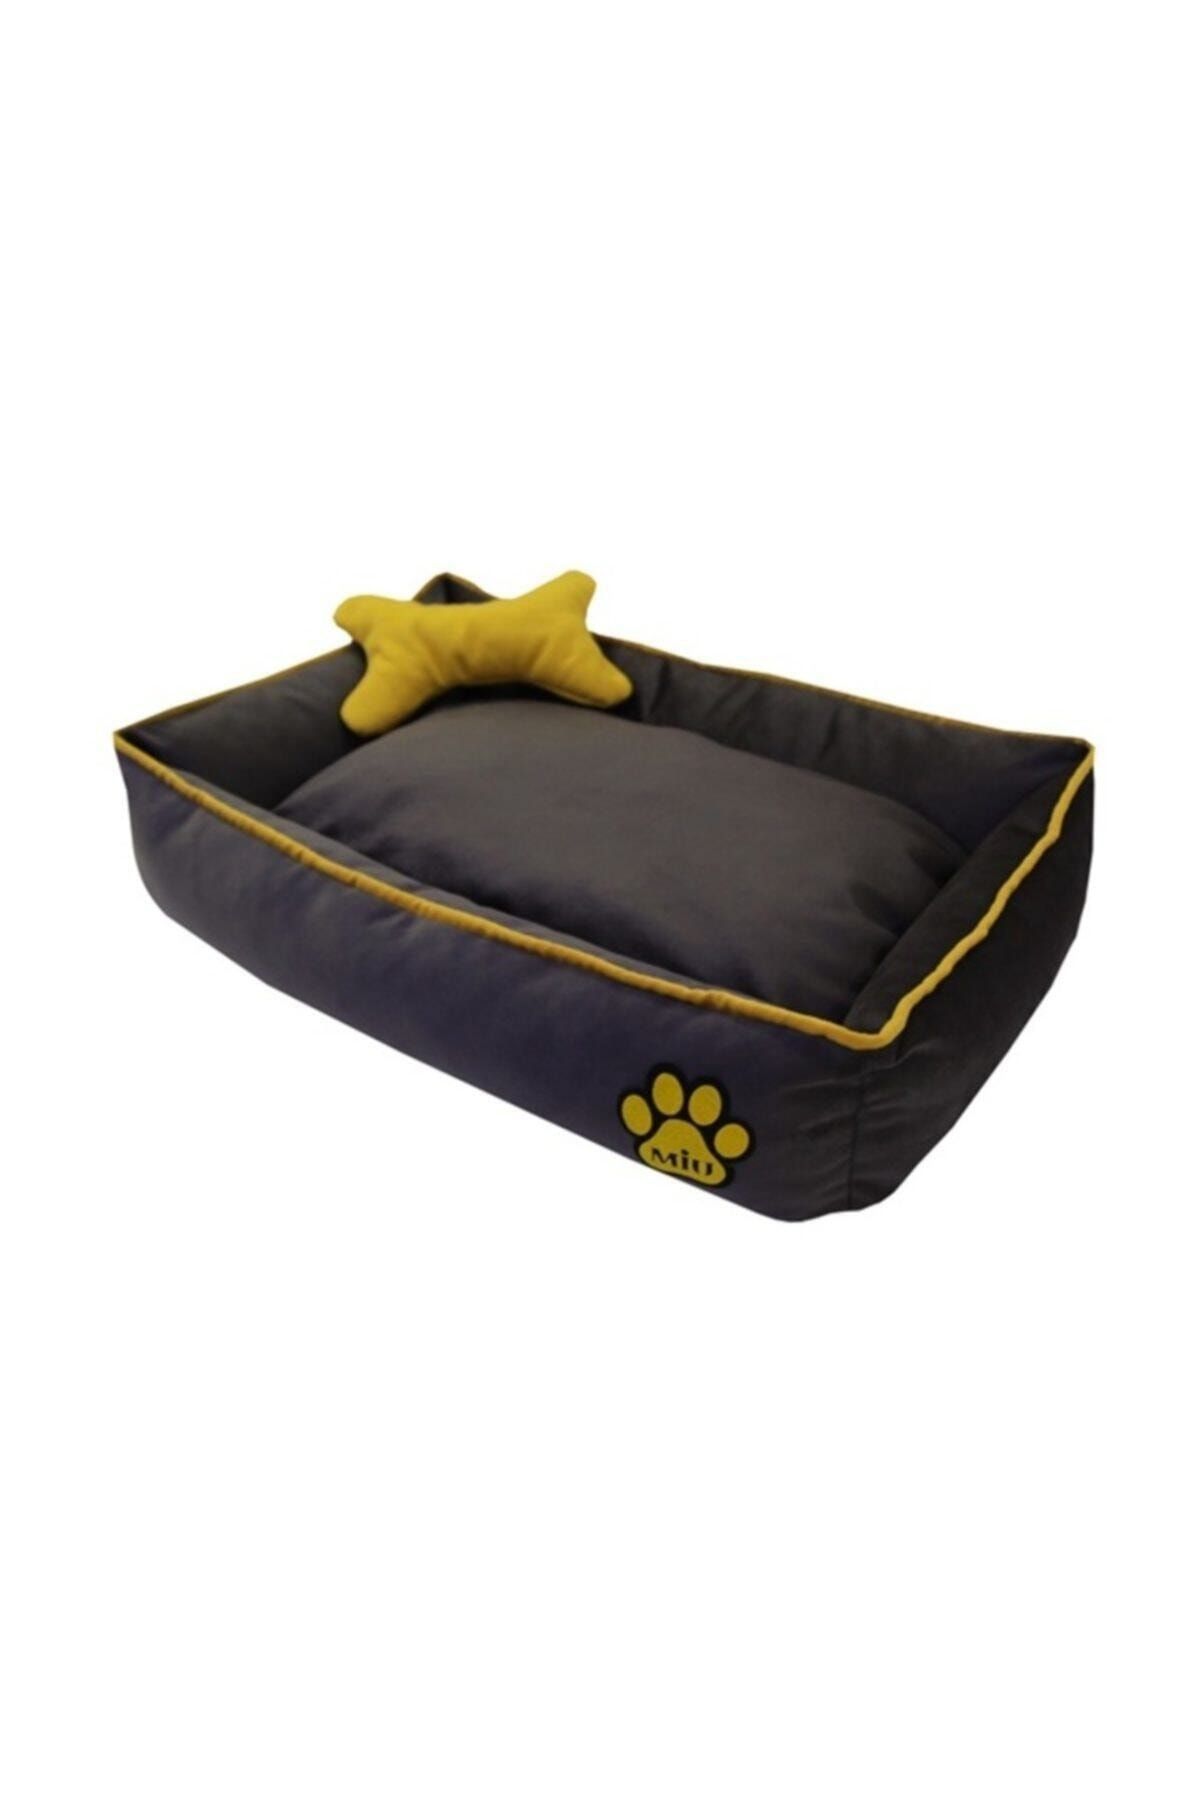 Miu Miu Miu Pets Tay Tüyü Köpek Yatağı Kemik Yastıklı 15*65*85 Cm Gri Medium